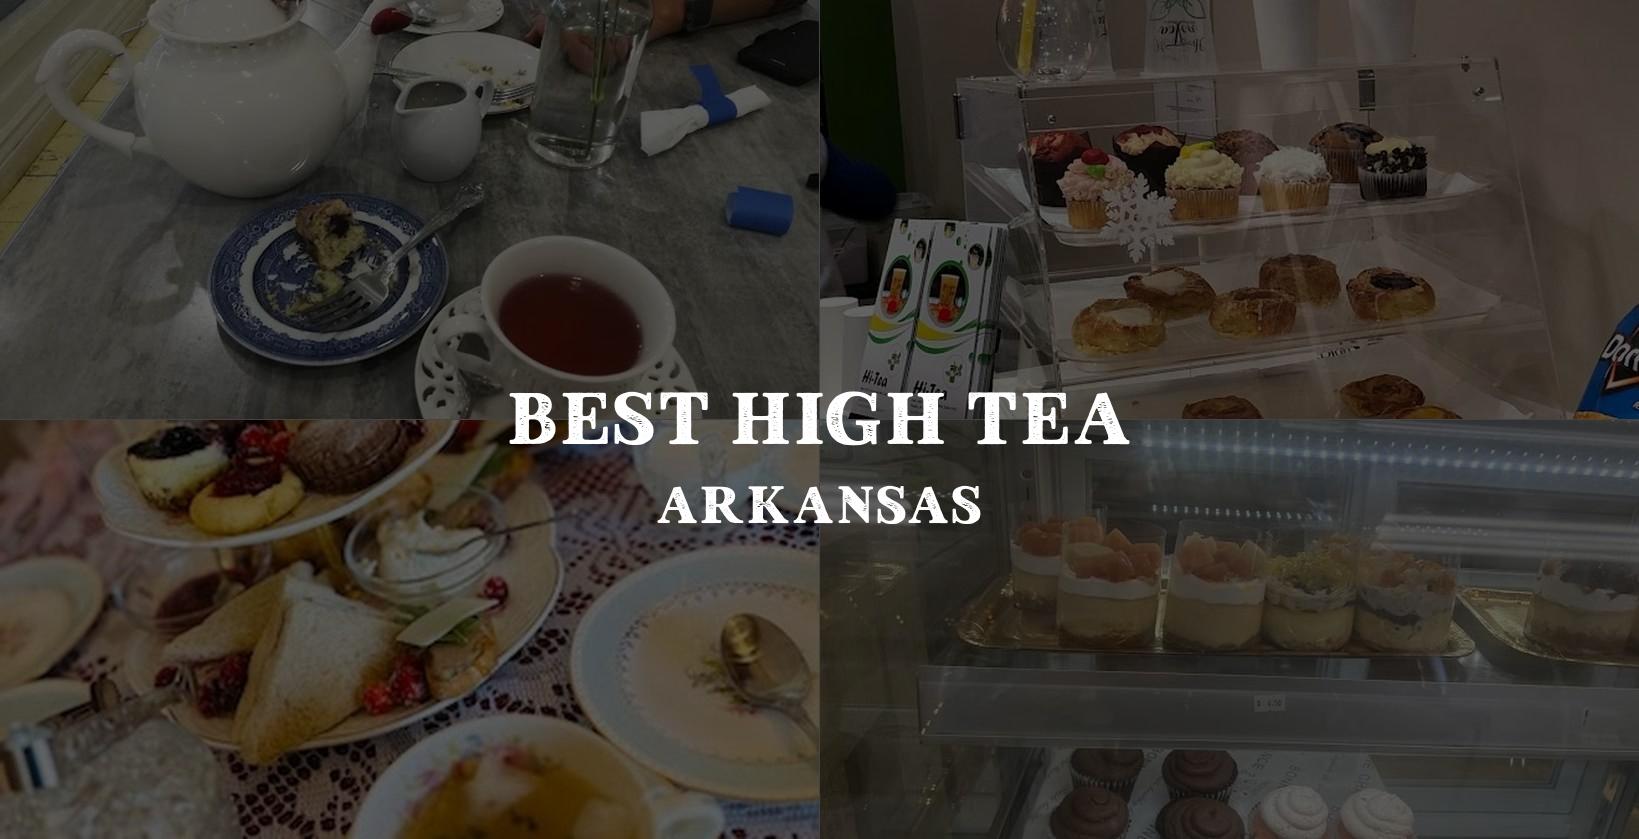 Choosing the perfect spot for High Tea in Arkansas